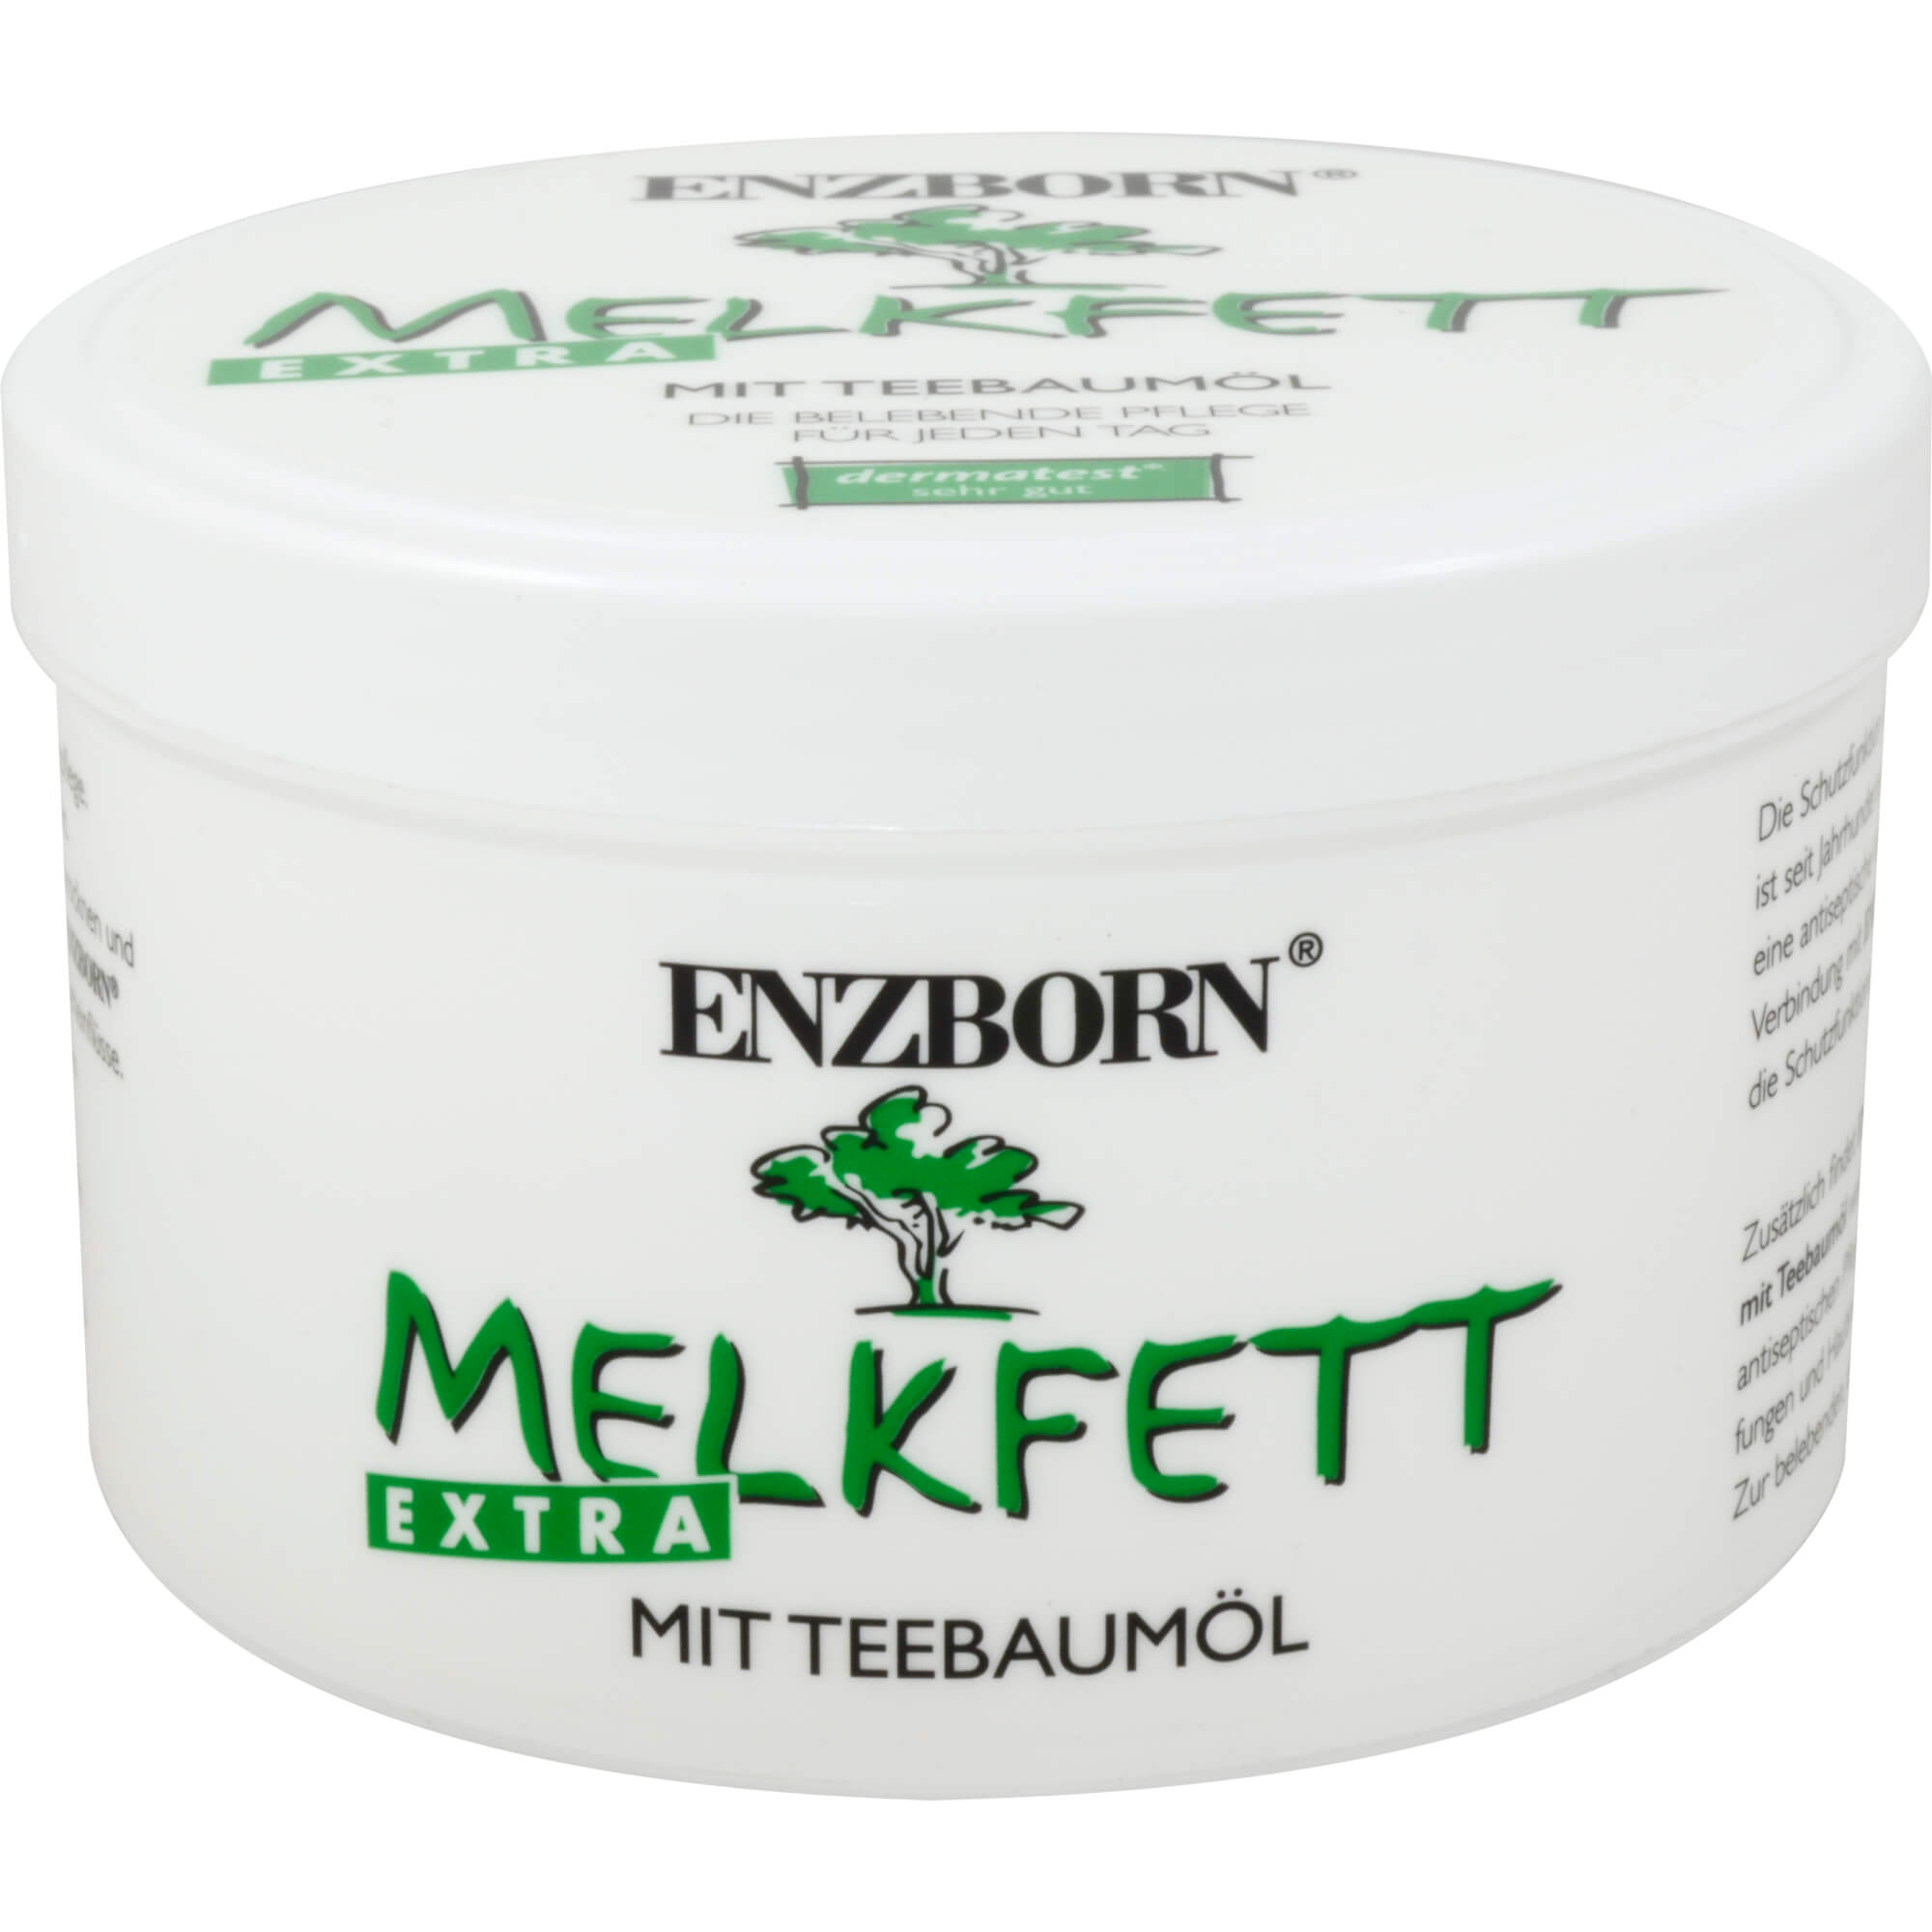 MELKFETT EXTRA mit Teebaumöl Enzborn Salbe